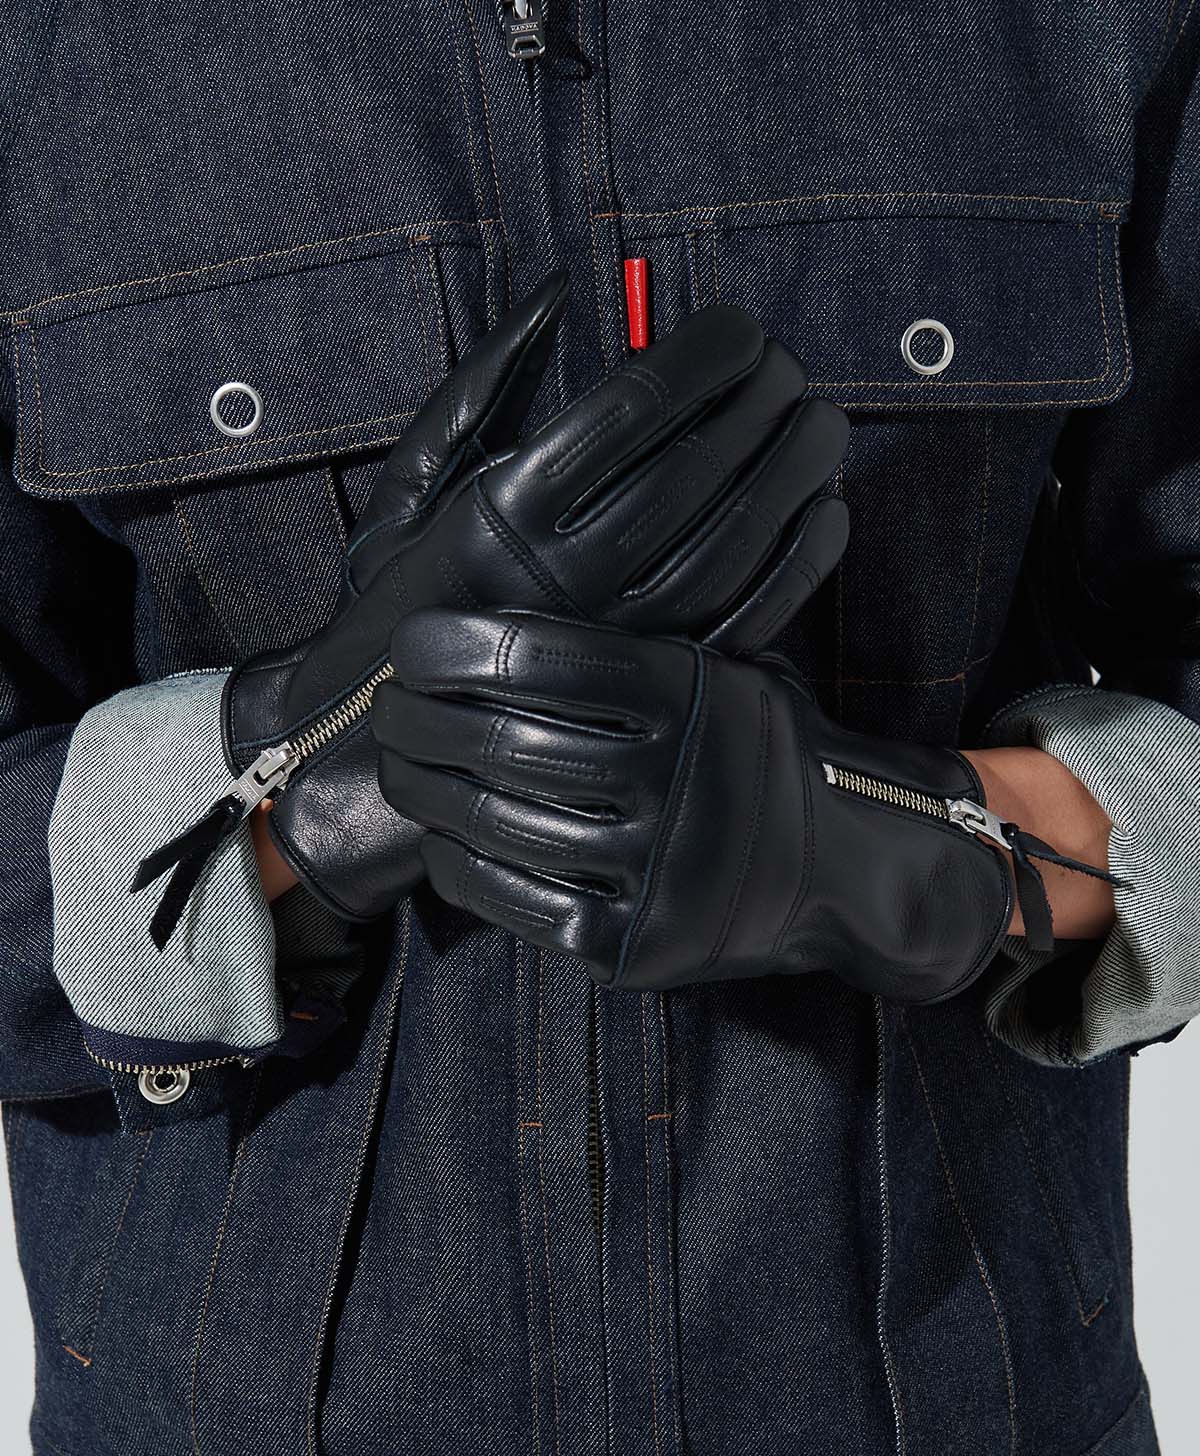 Rox gant / noir